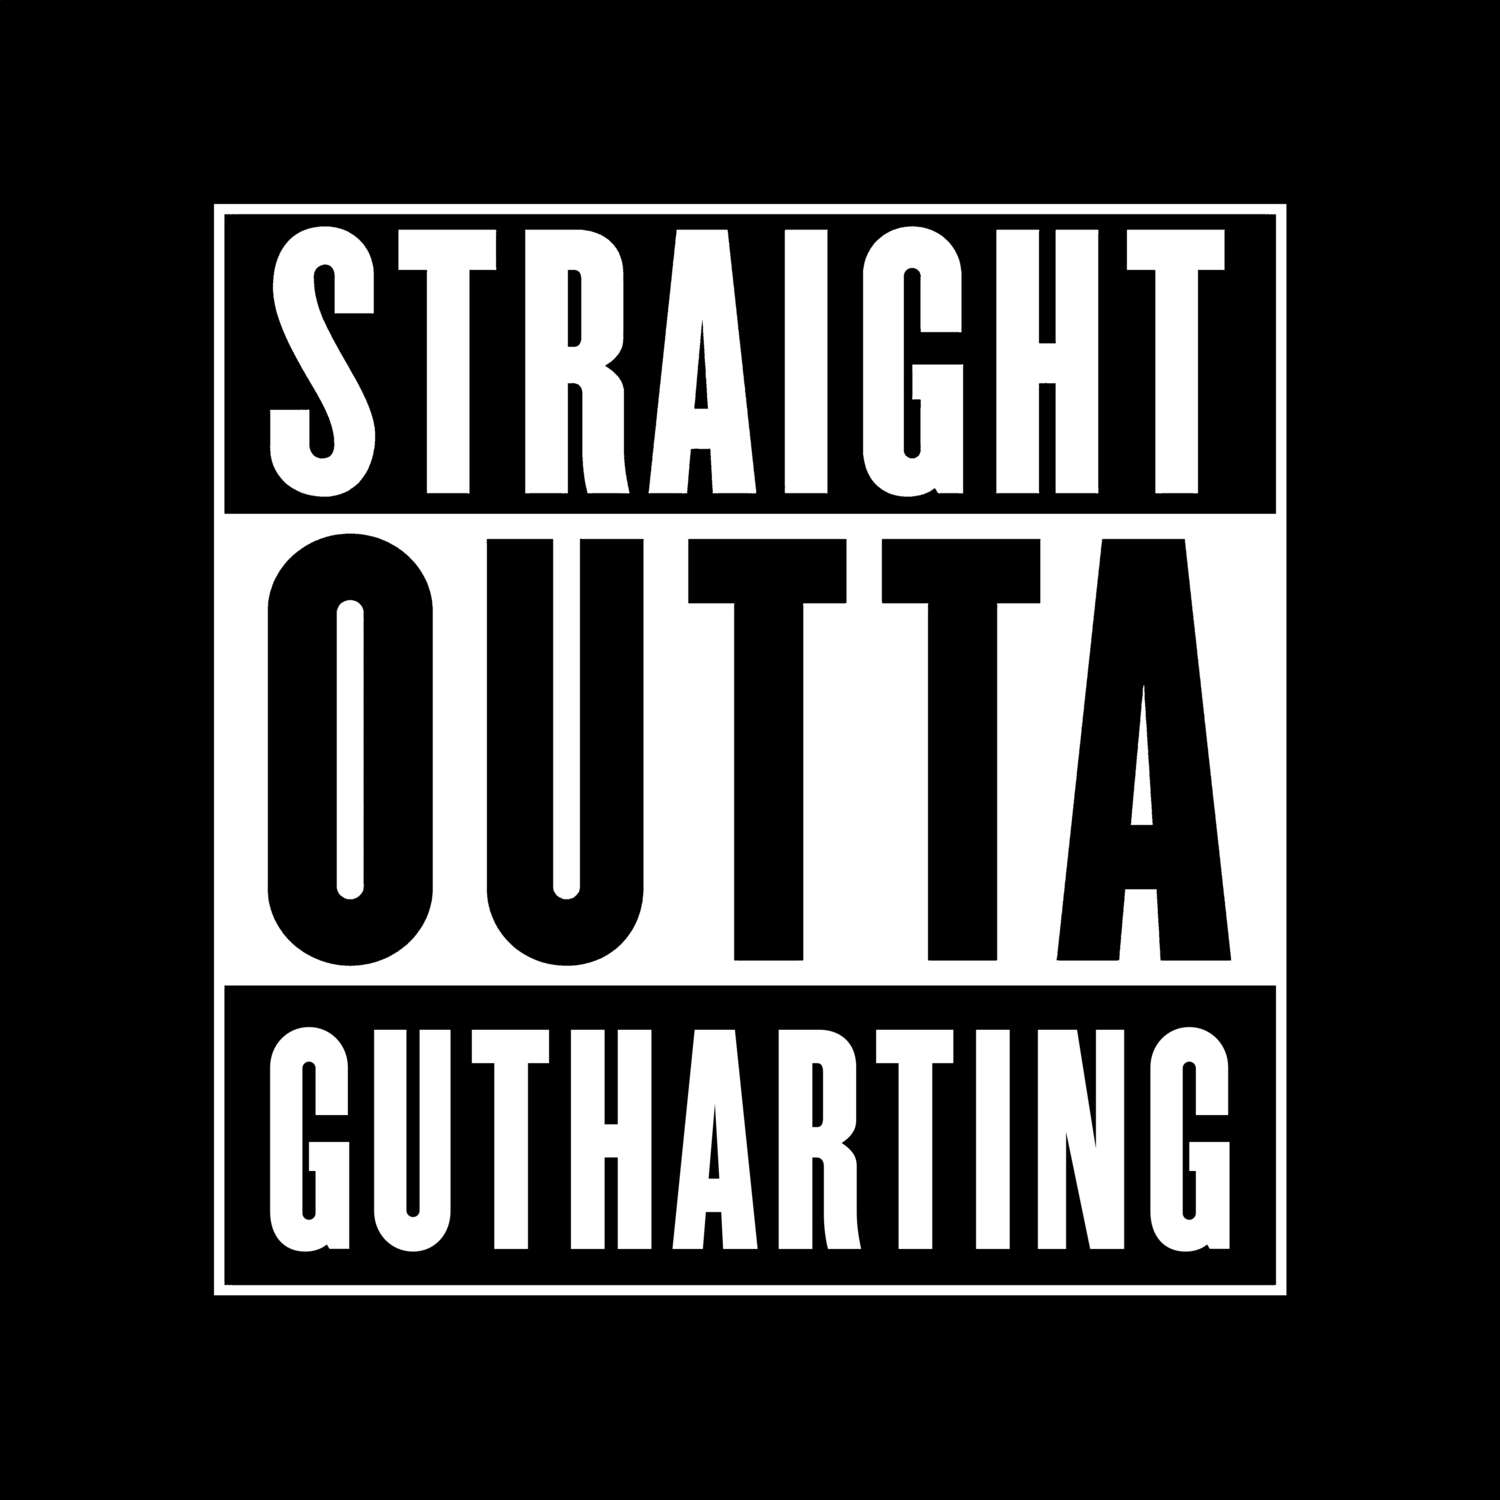 Gutharting T-Shirt »Straight Outta«